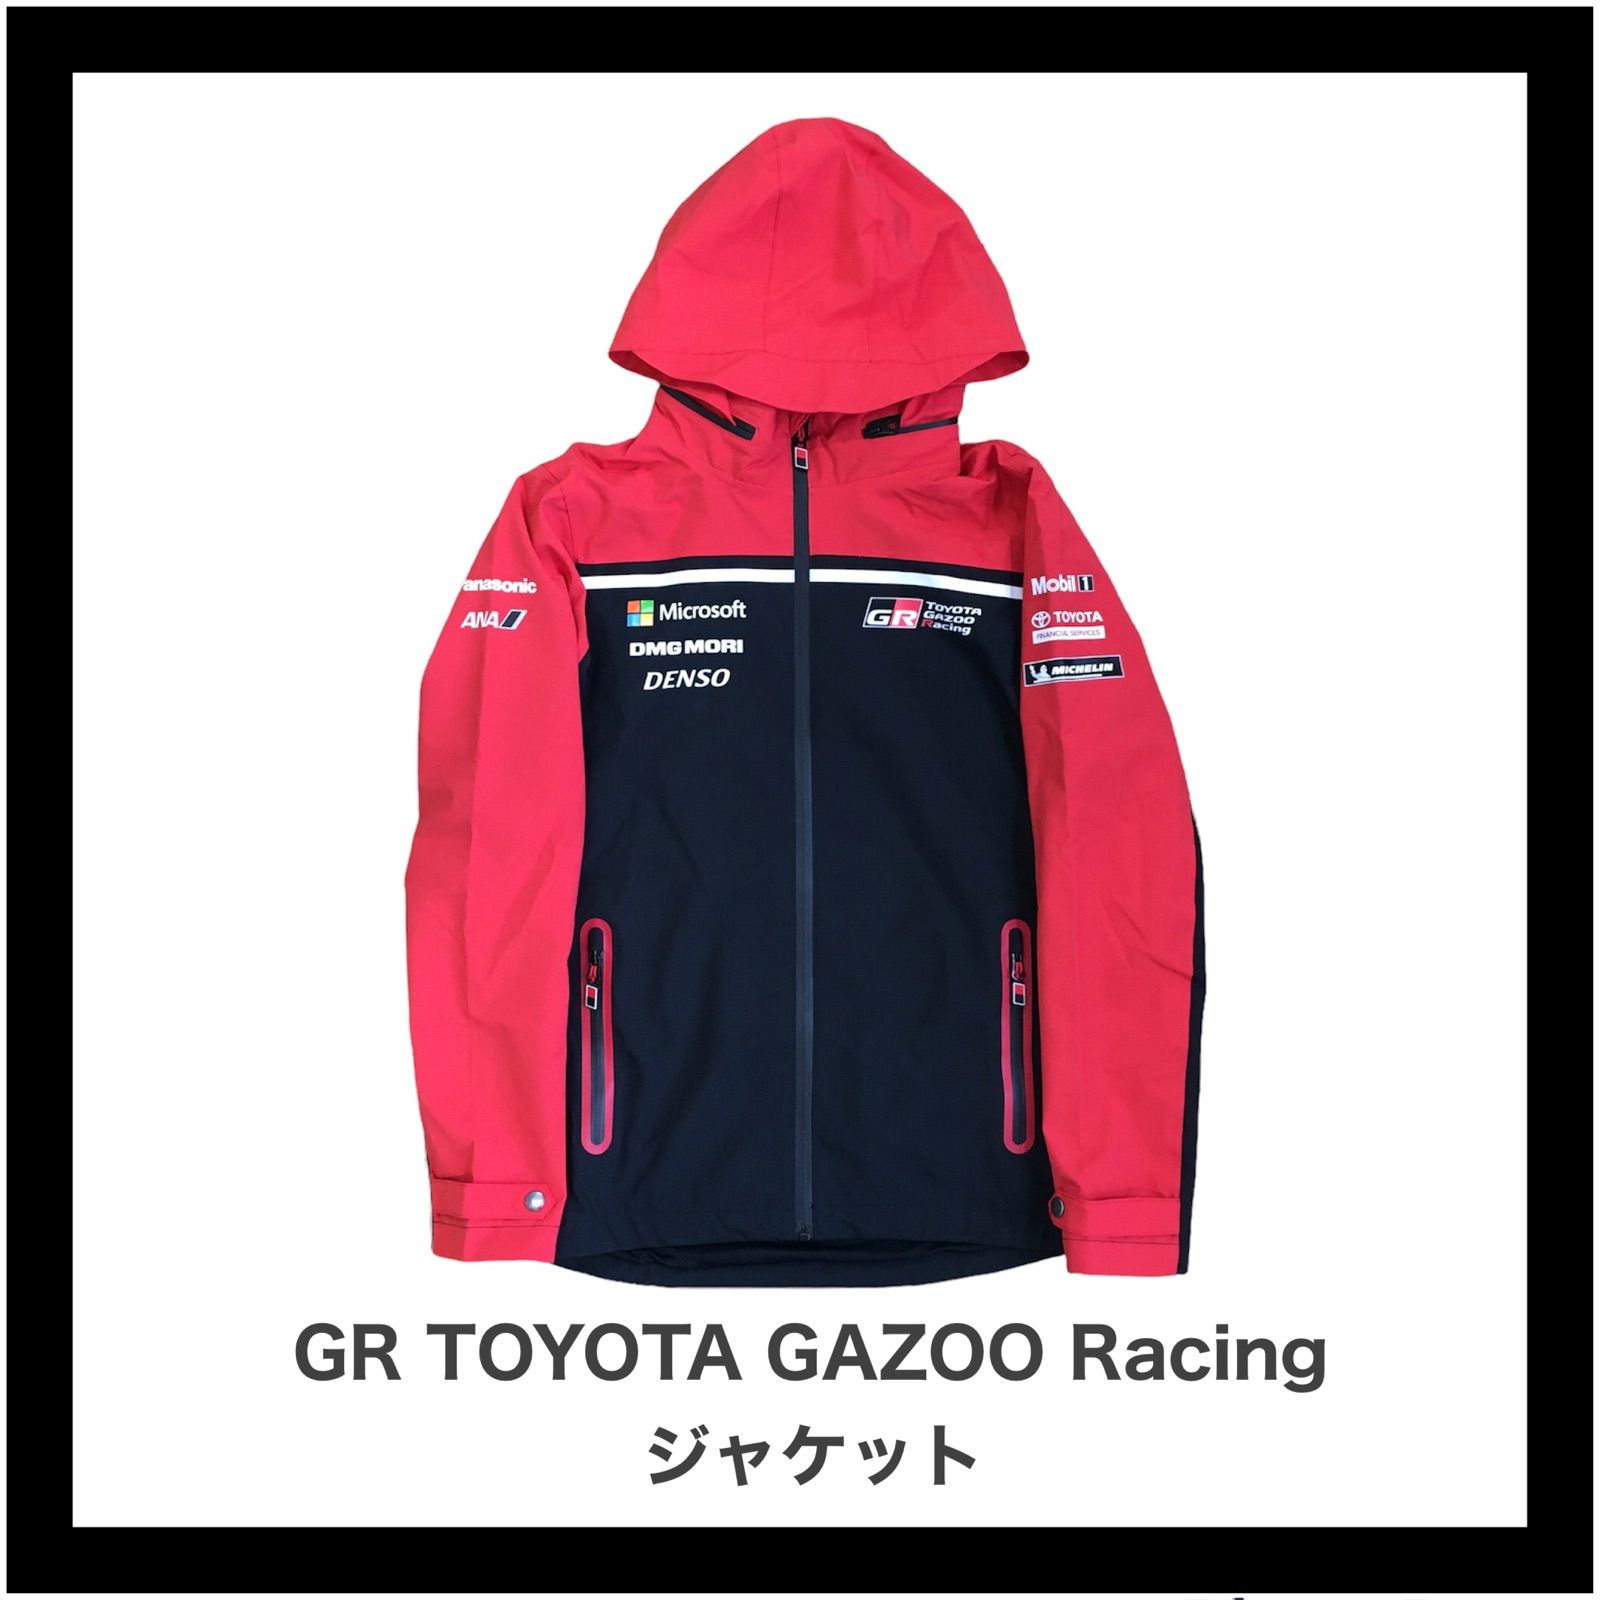 GR TOYOTA GAZOO Racing トヨタガズーレーシング ジャケット - メルカリ